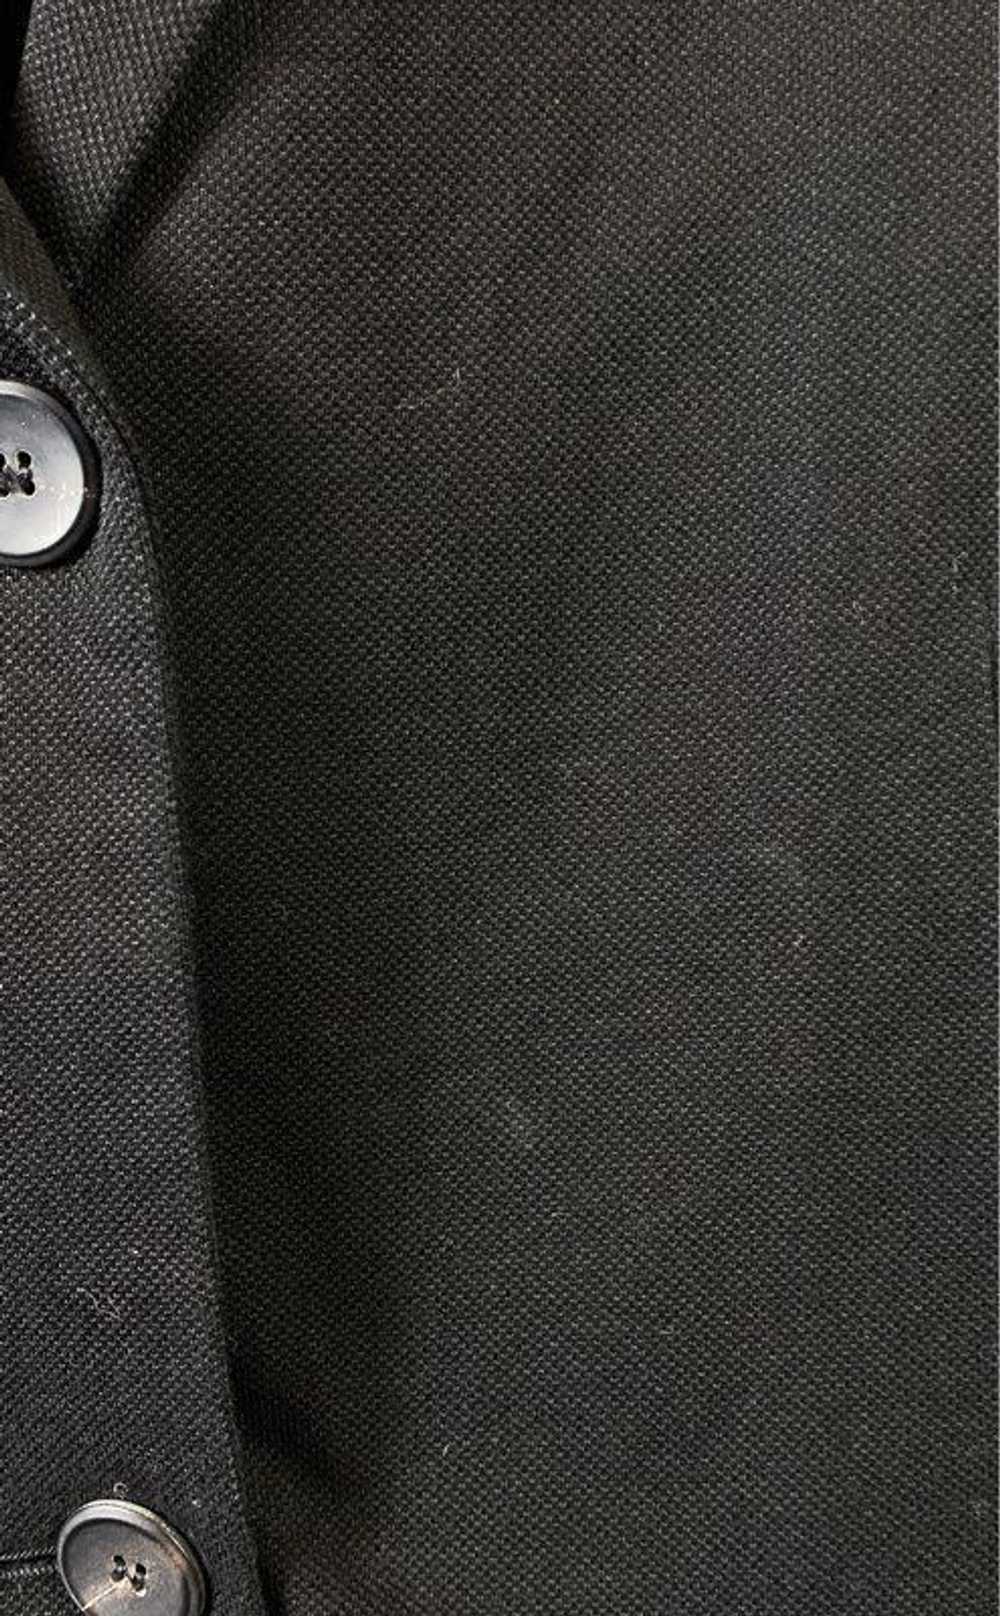 Jil Sander Black Blazer - Size Small - image 4